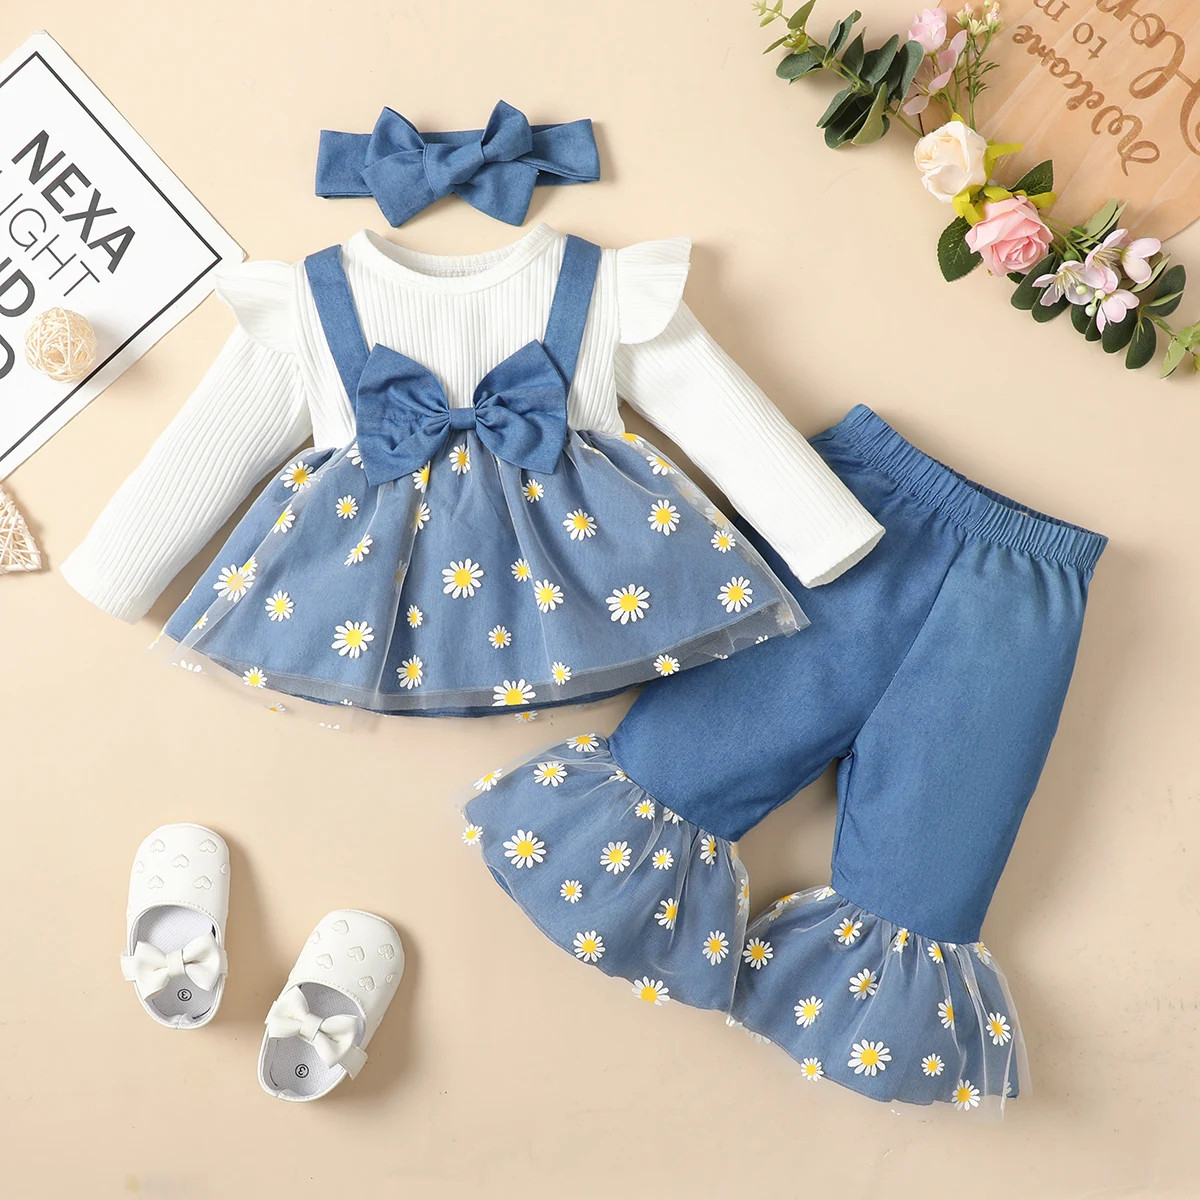 Davruna Blossom Charm Baby Outfit